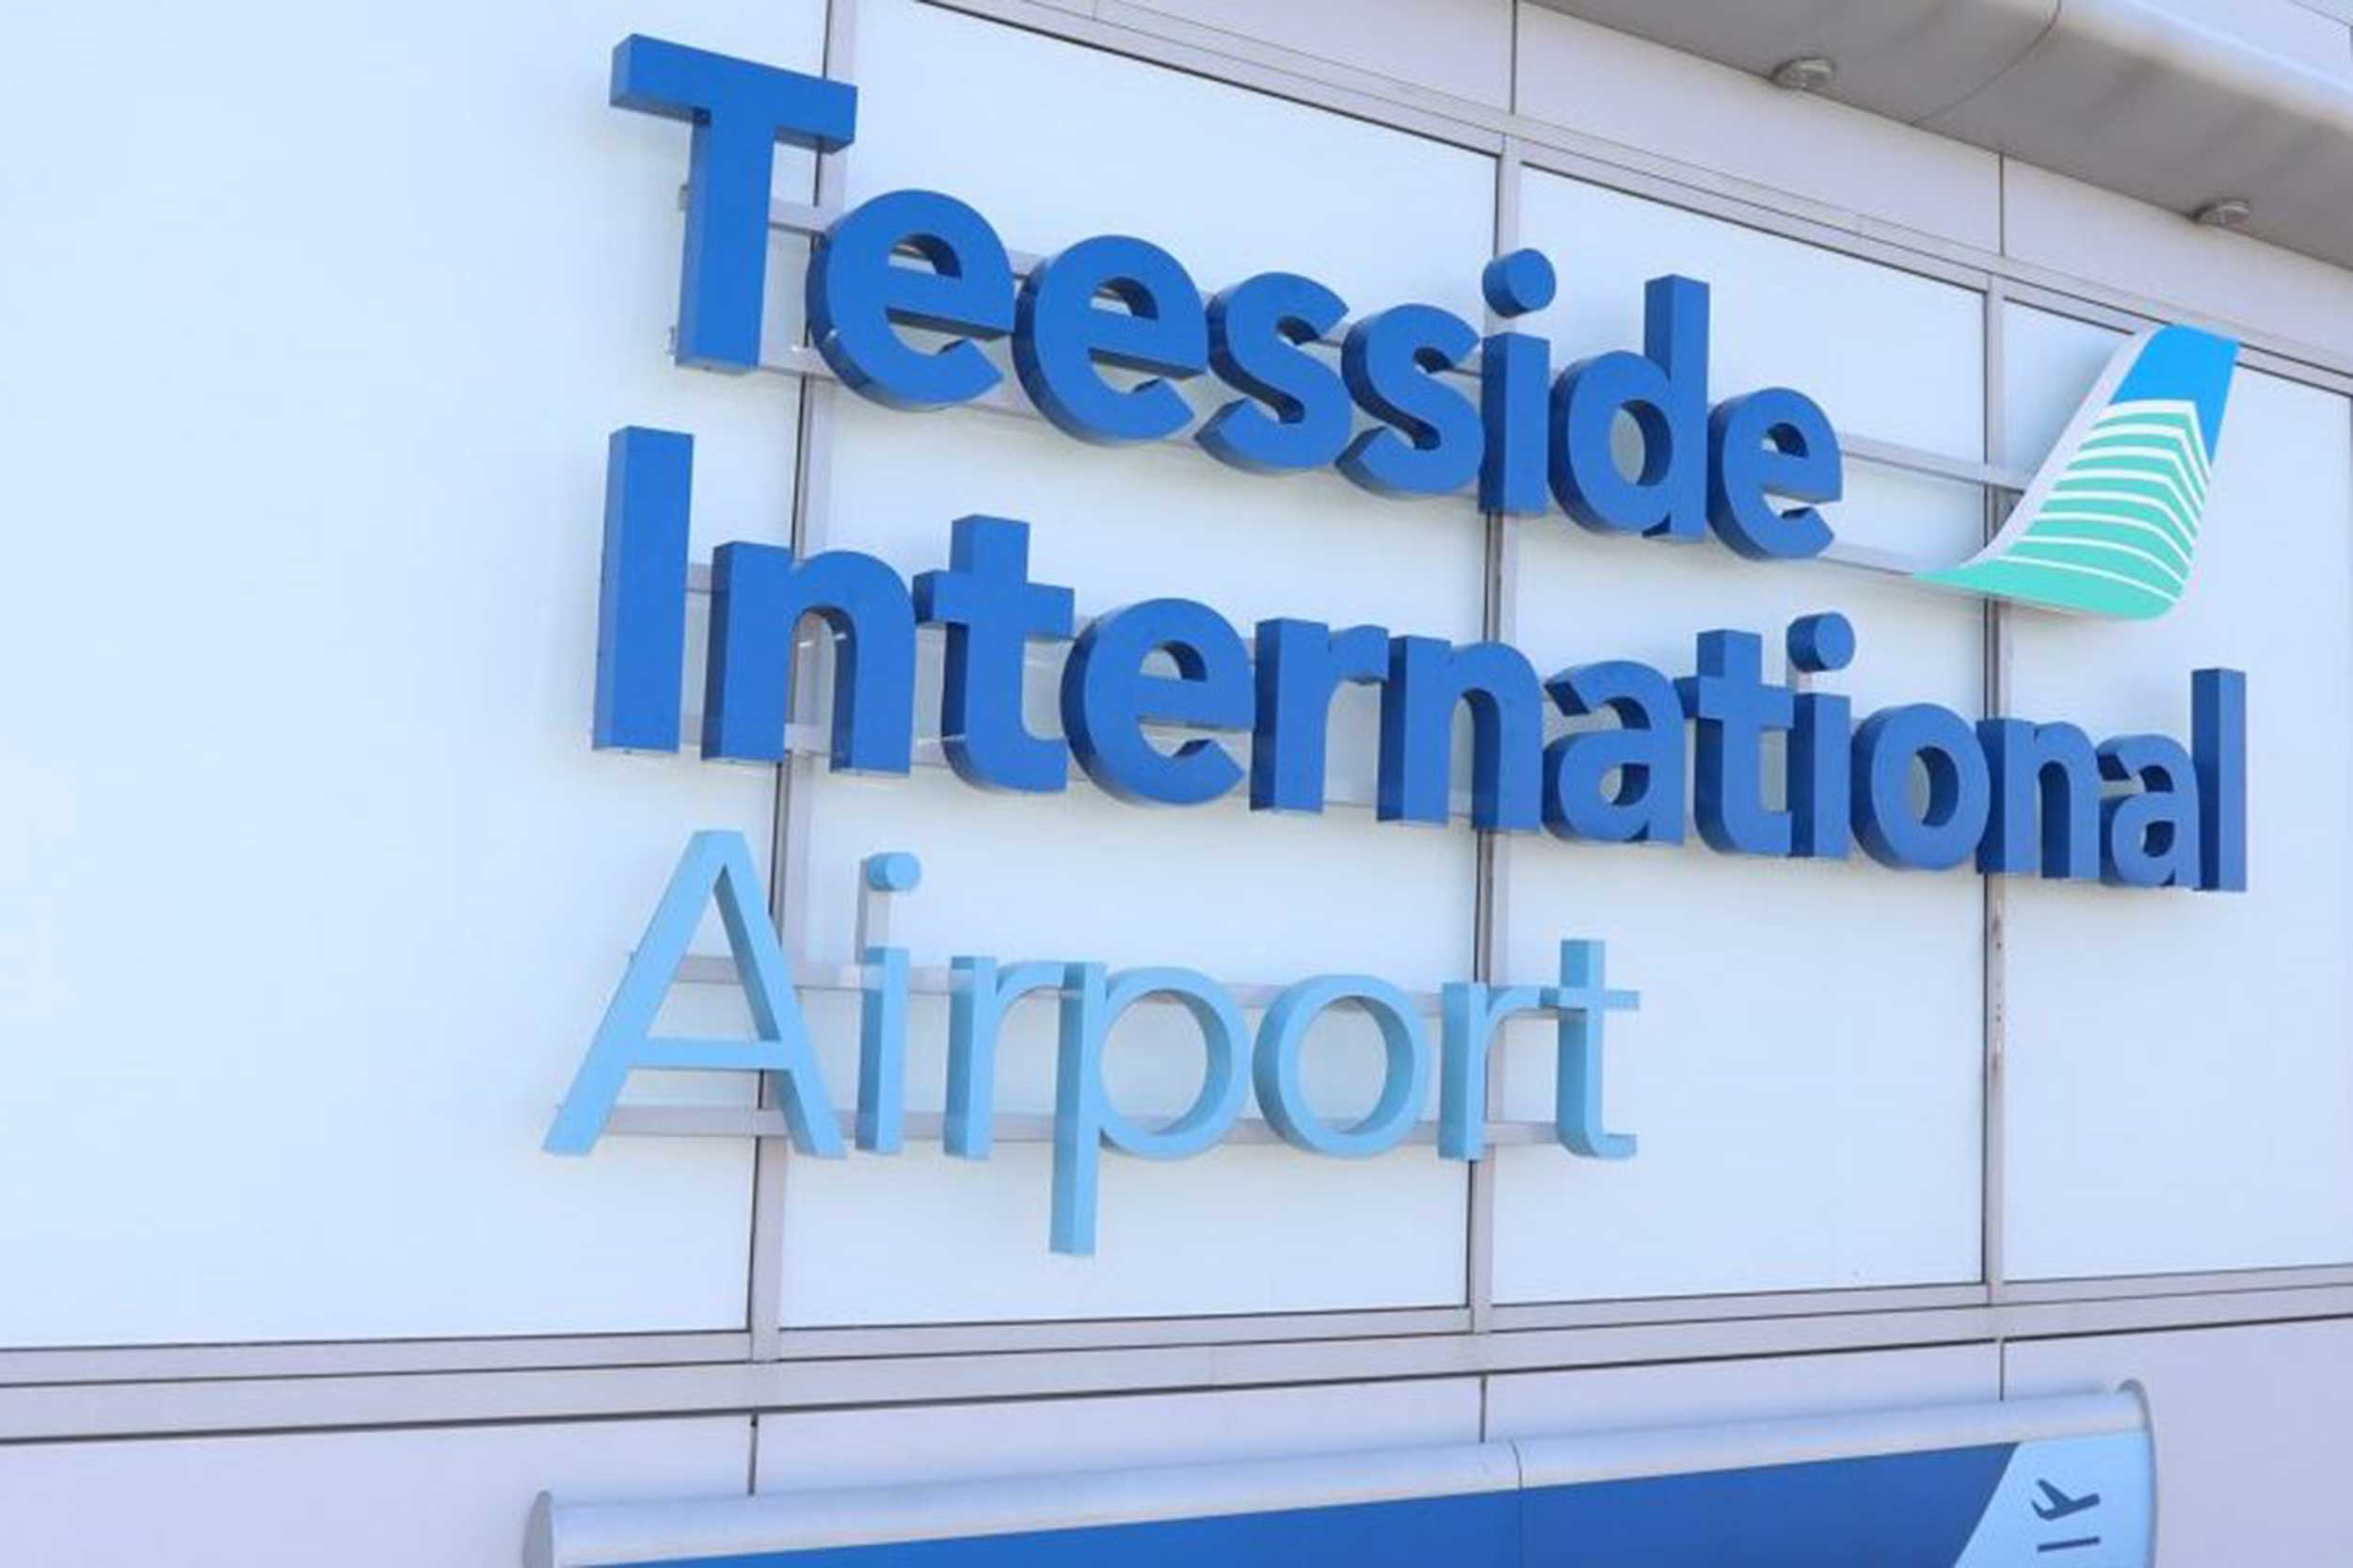 Teeaide International Airport